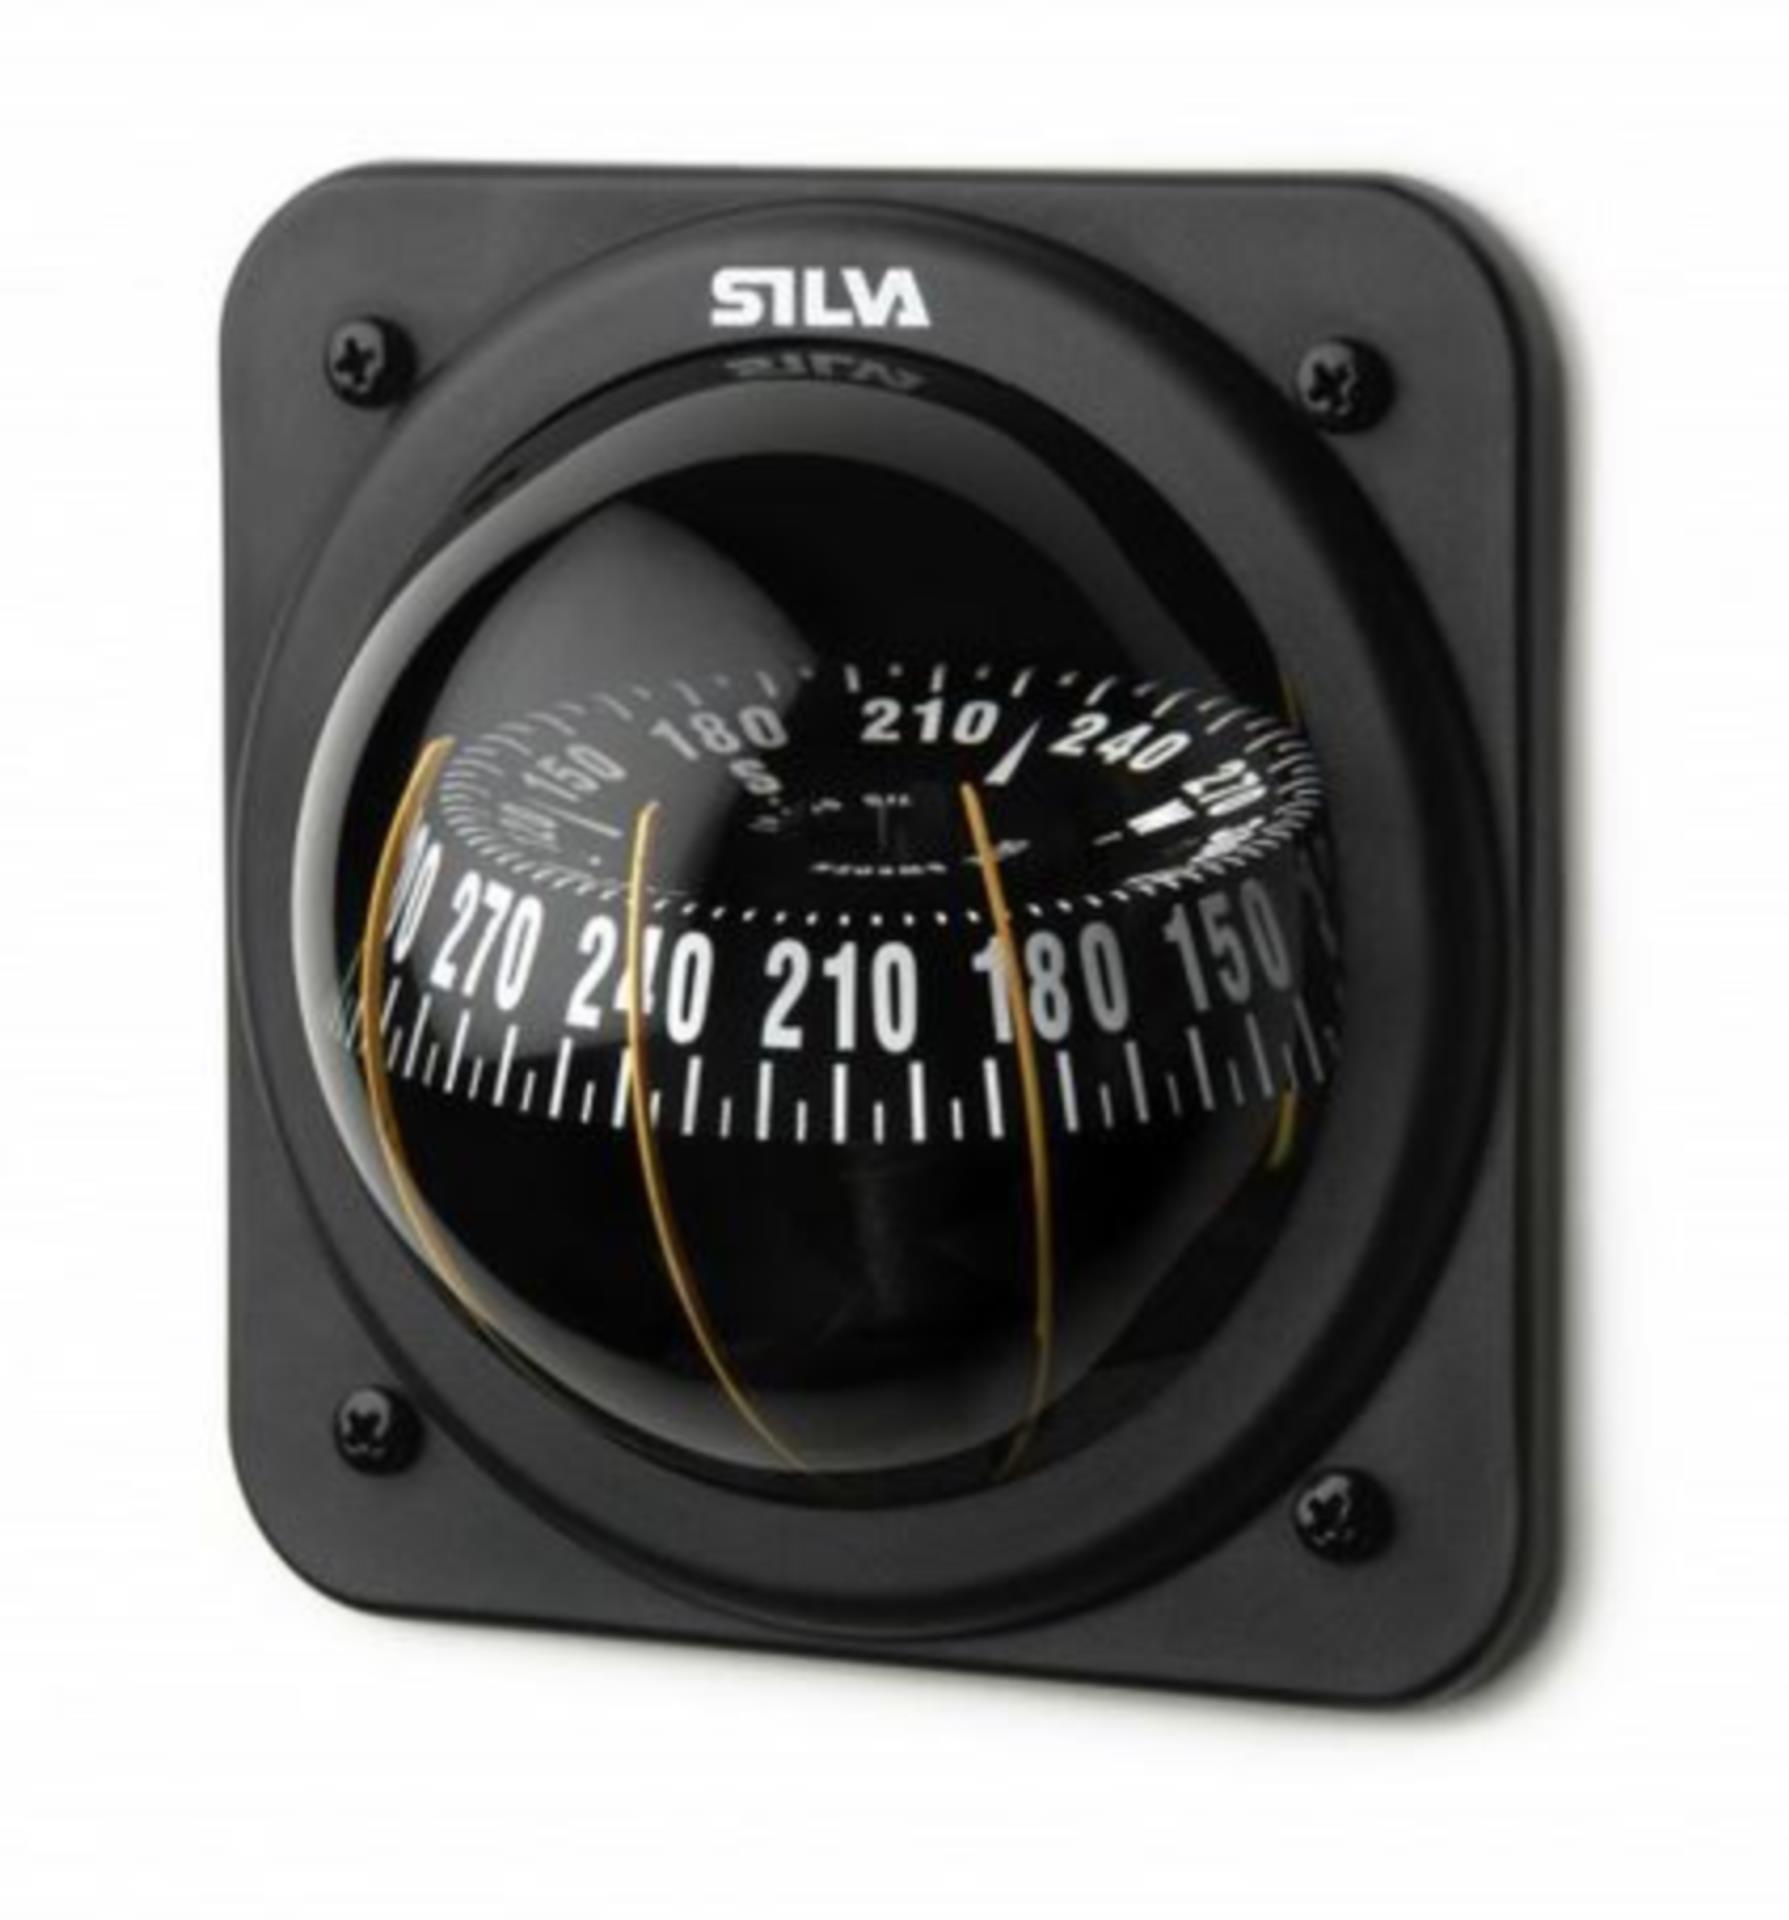 Silva Kompass 100P